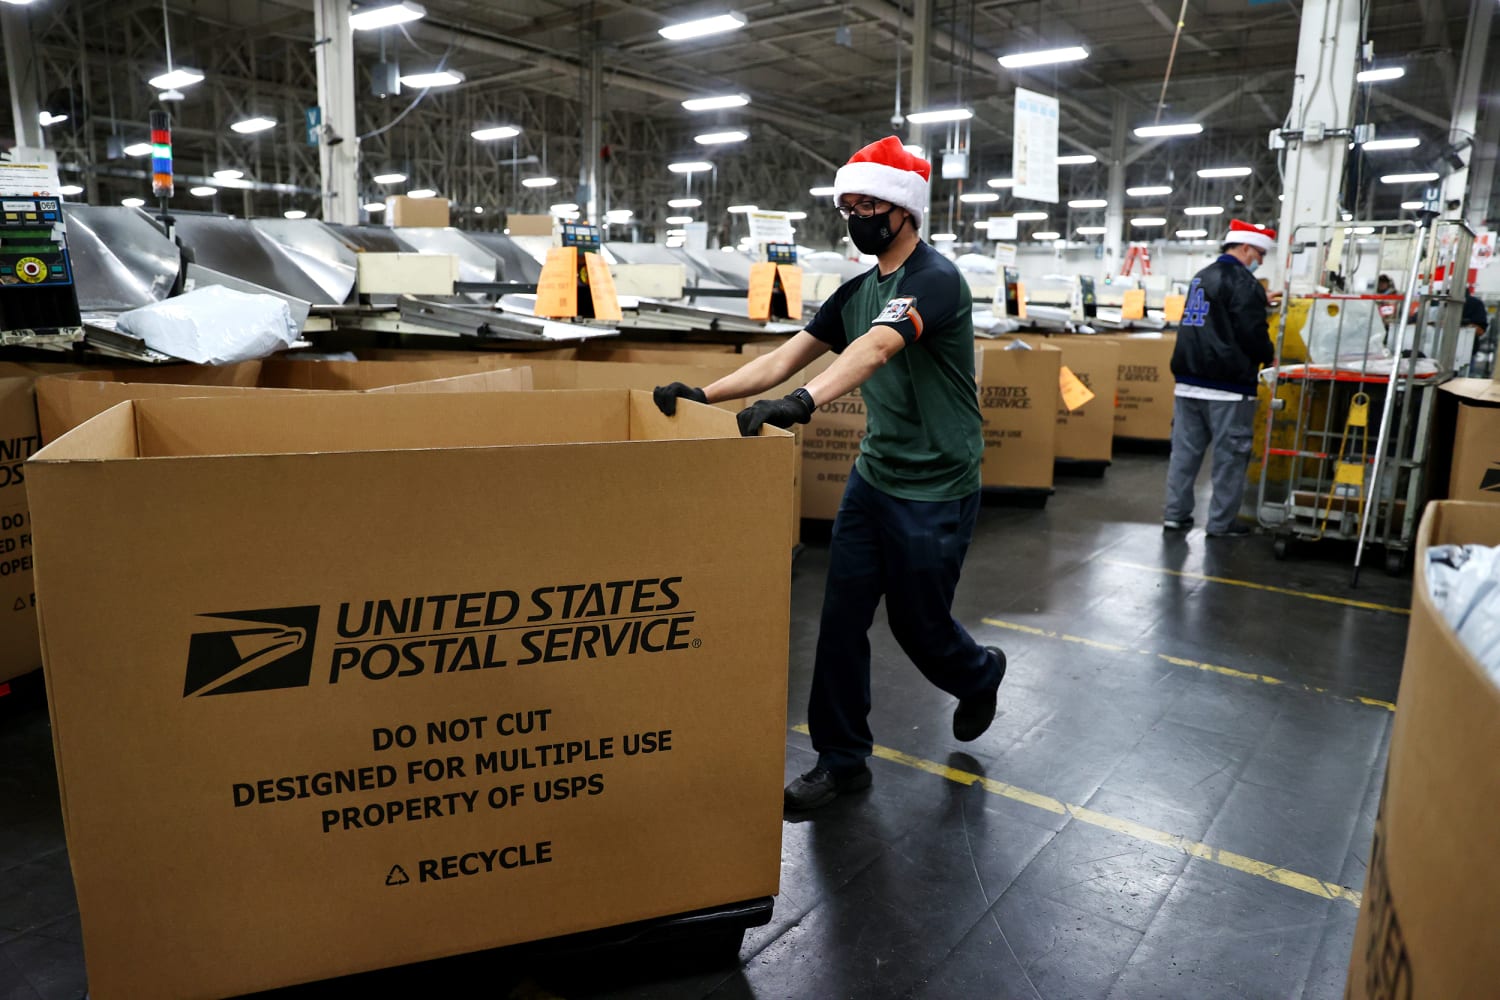 U.S Postal Service delivered smooth holiday season, analysis shows